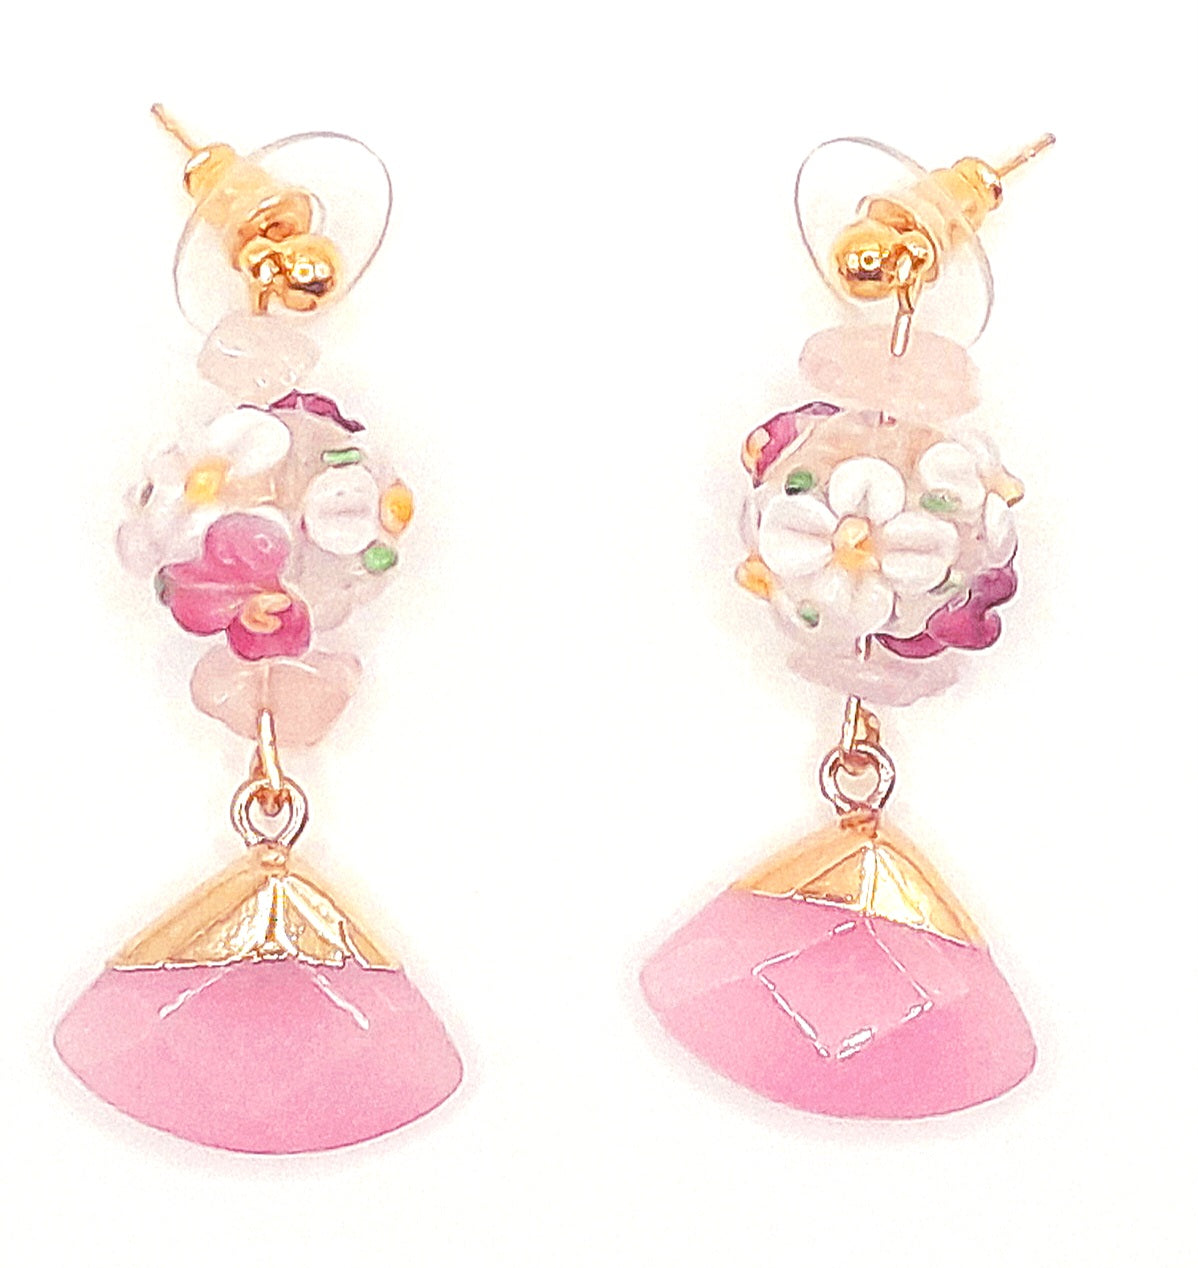 Beautiful Blooms & Ocean Blues: Agate Stone Earrings Set on 18K Gold Plated Studs